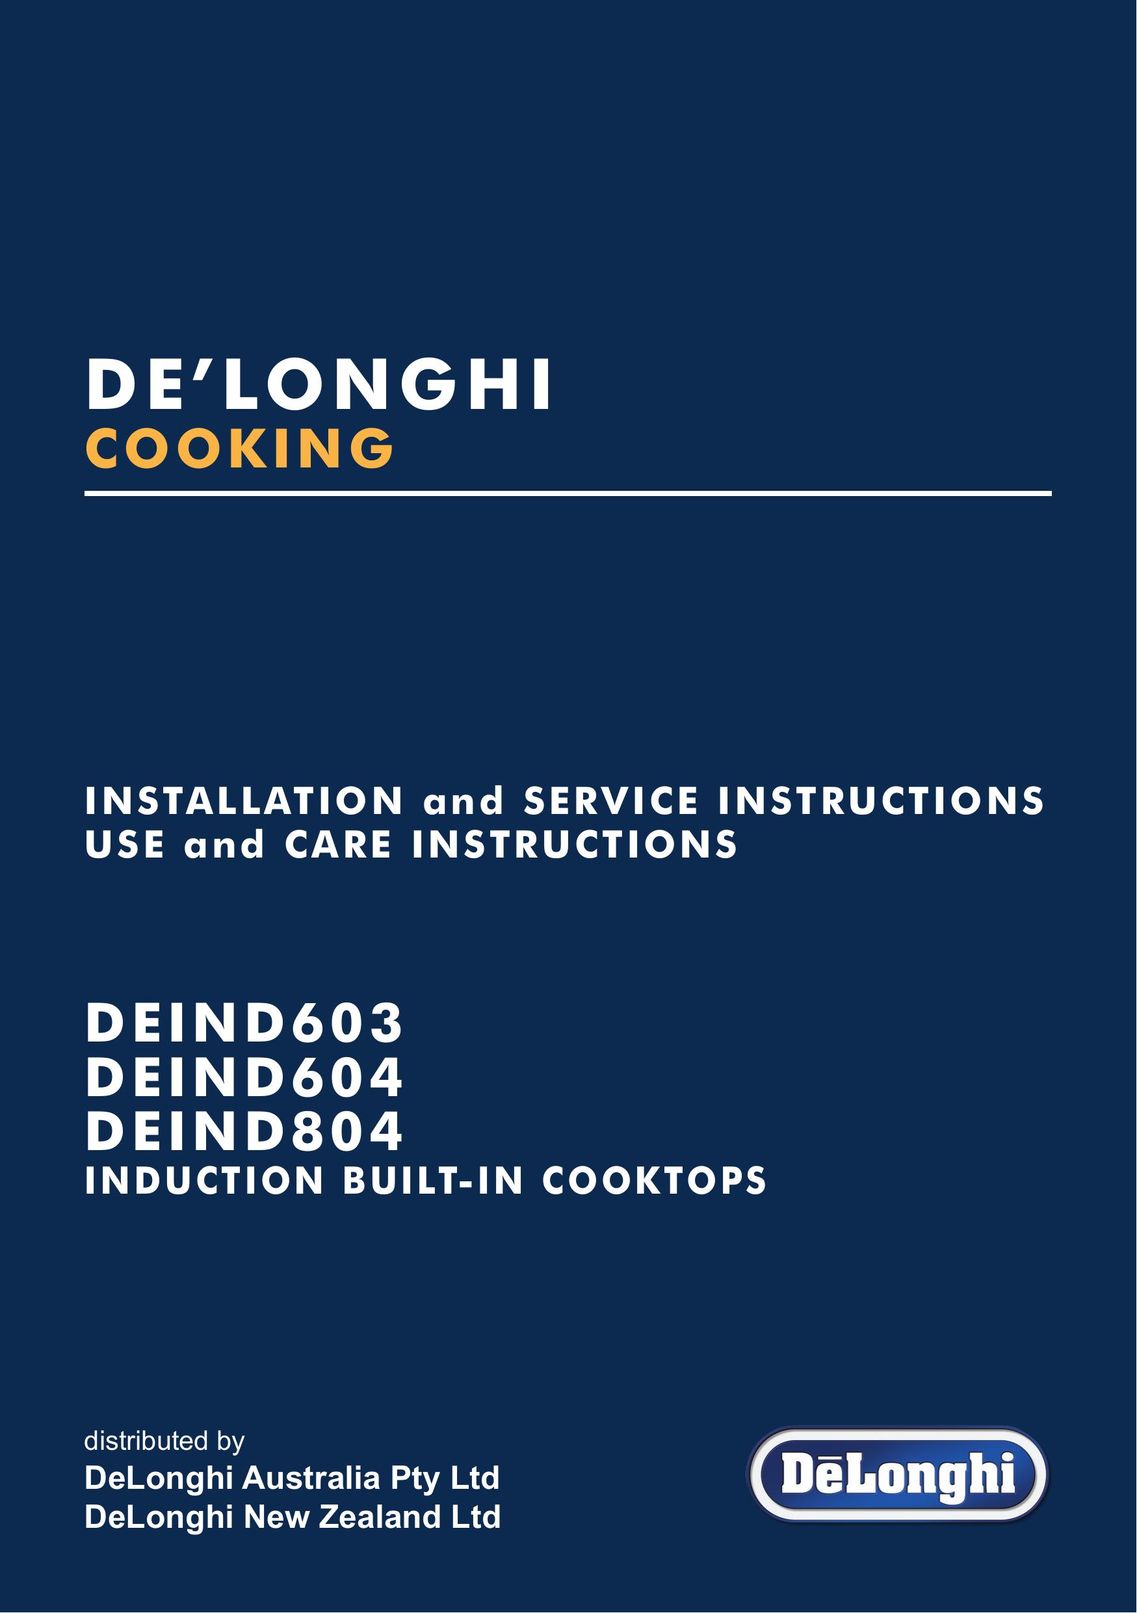 DeLonghi DEIND804 Cooktop User Manual